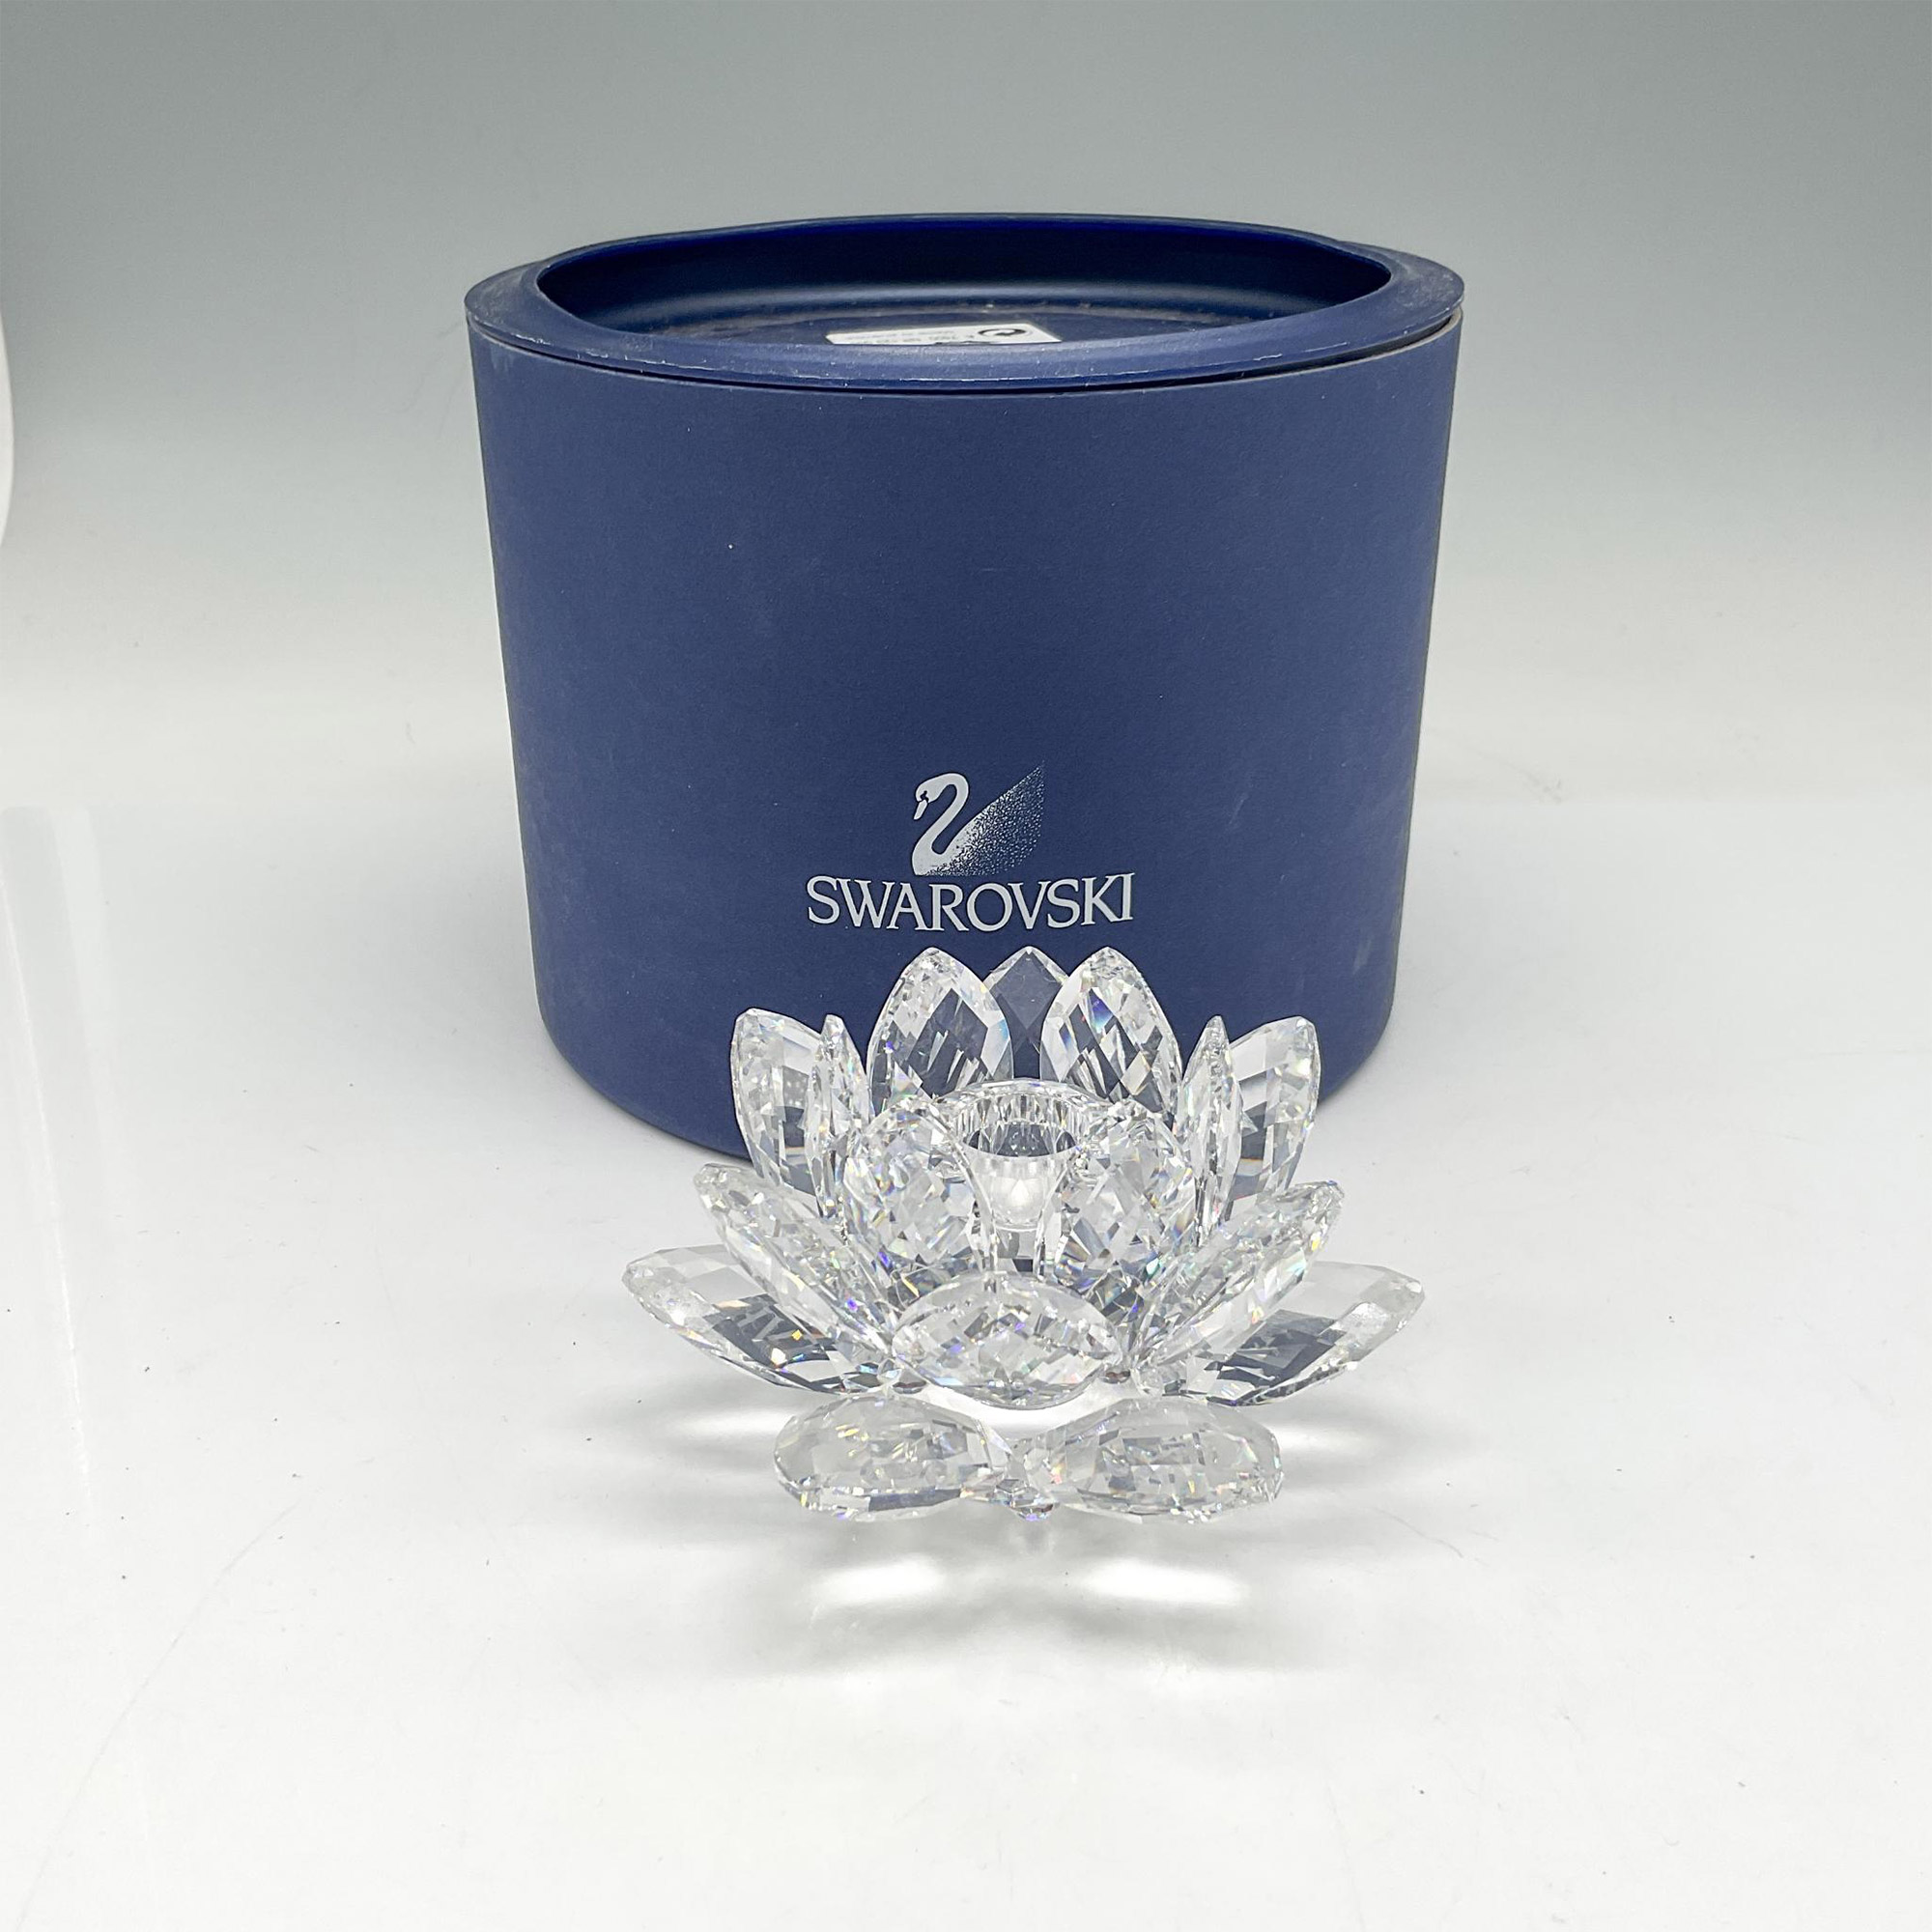 Swarovski Silver Crystal Candleholder, Medium Waterlily - Image 4 of 4